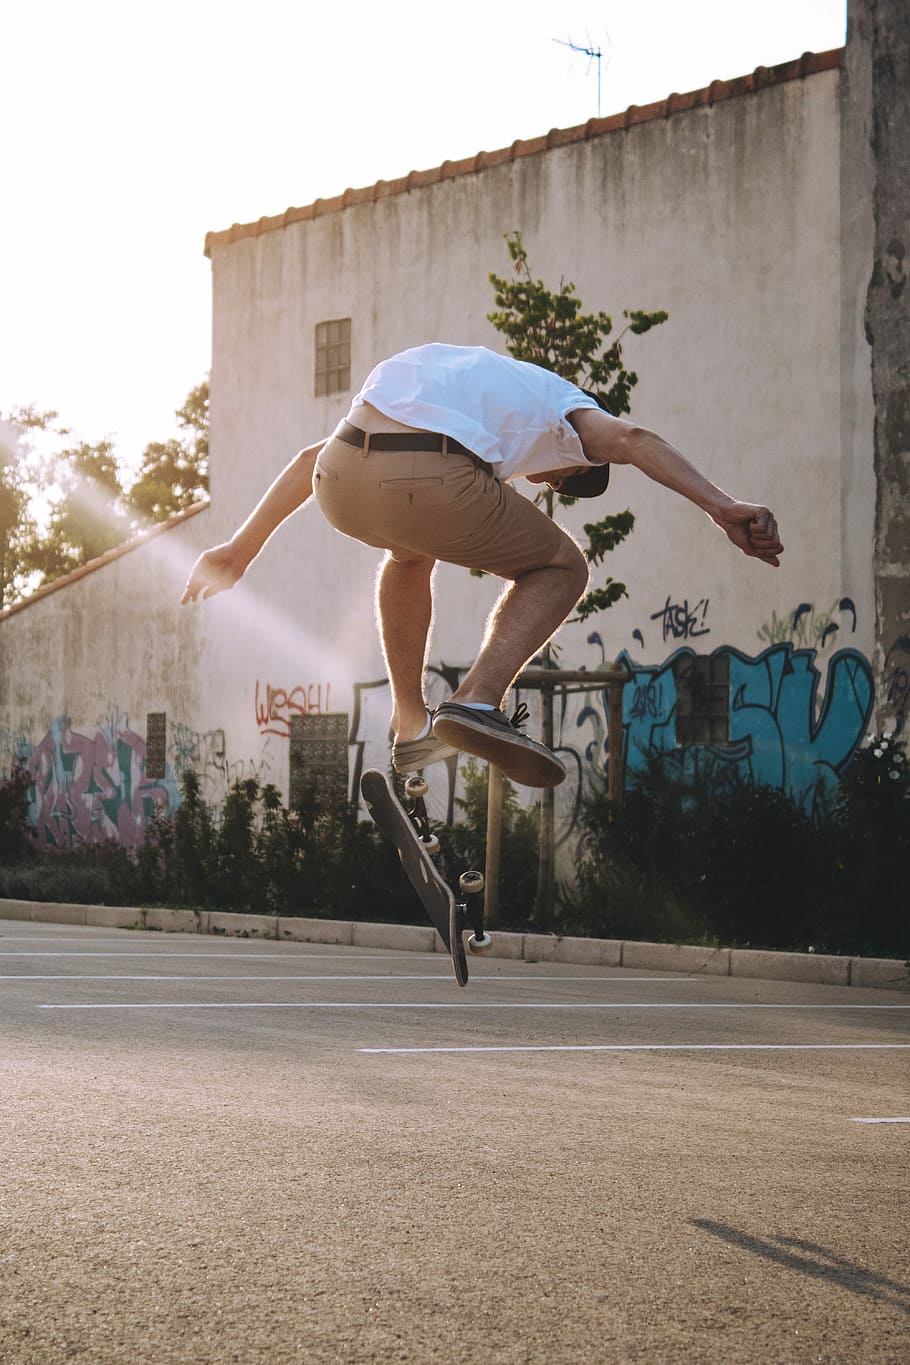 man playing long board wearing white shirt, man jumping with skateboard time lapse photography